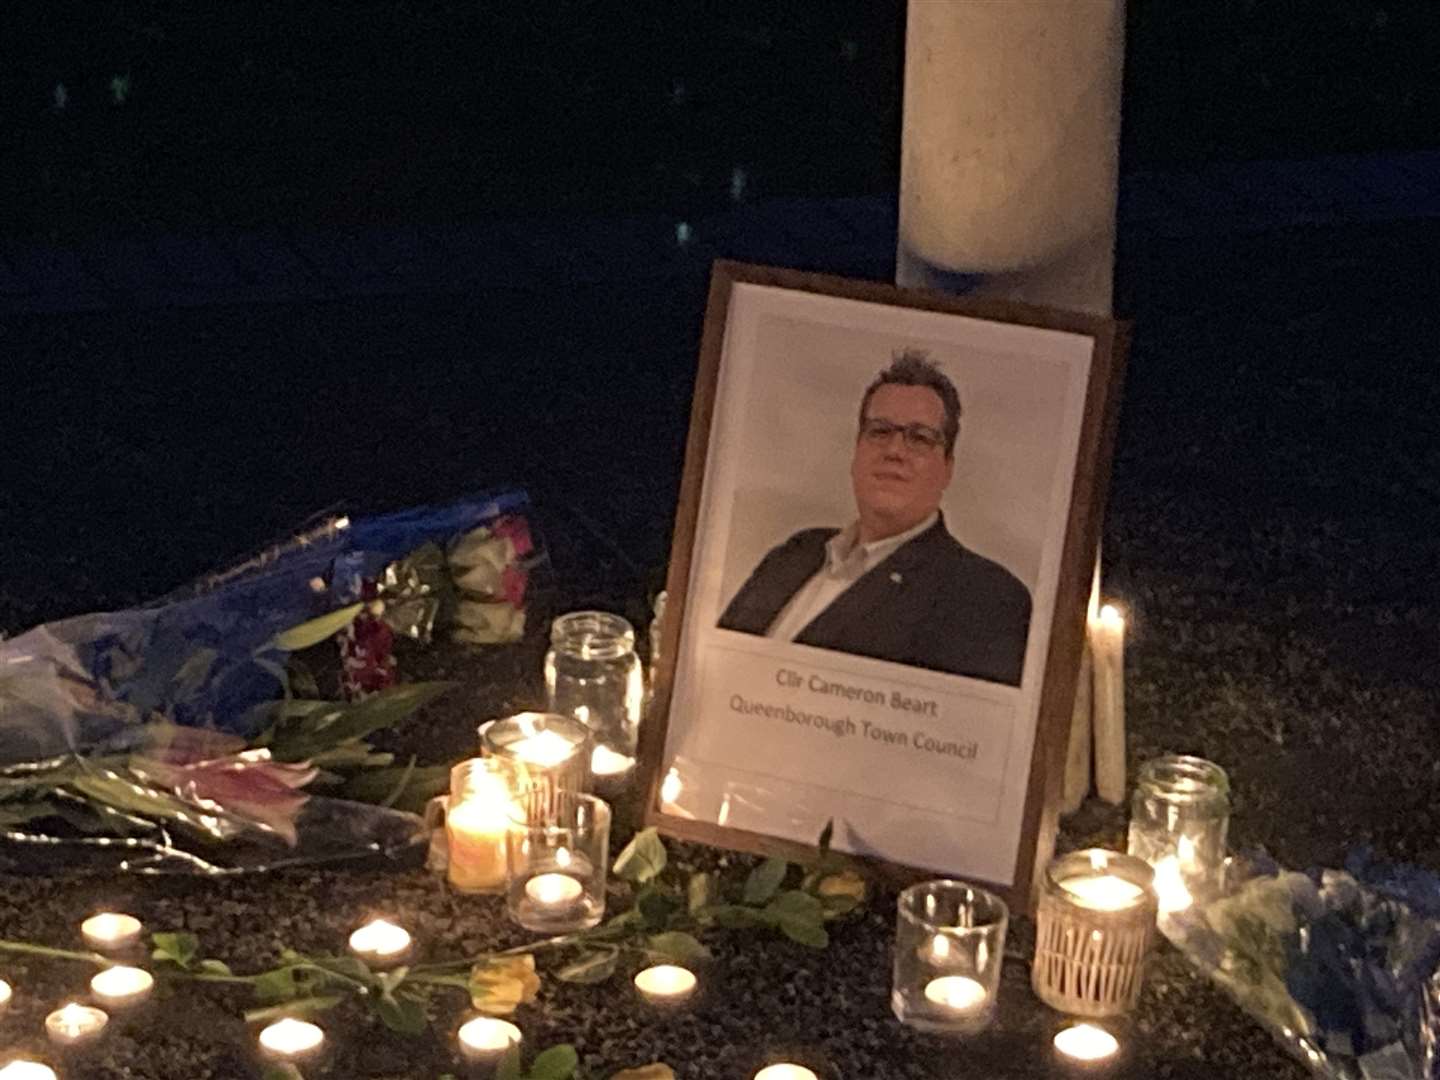 The candlelit vigil for Cameron Beart. Picture: John Nurden